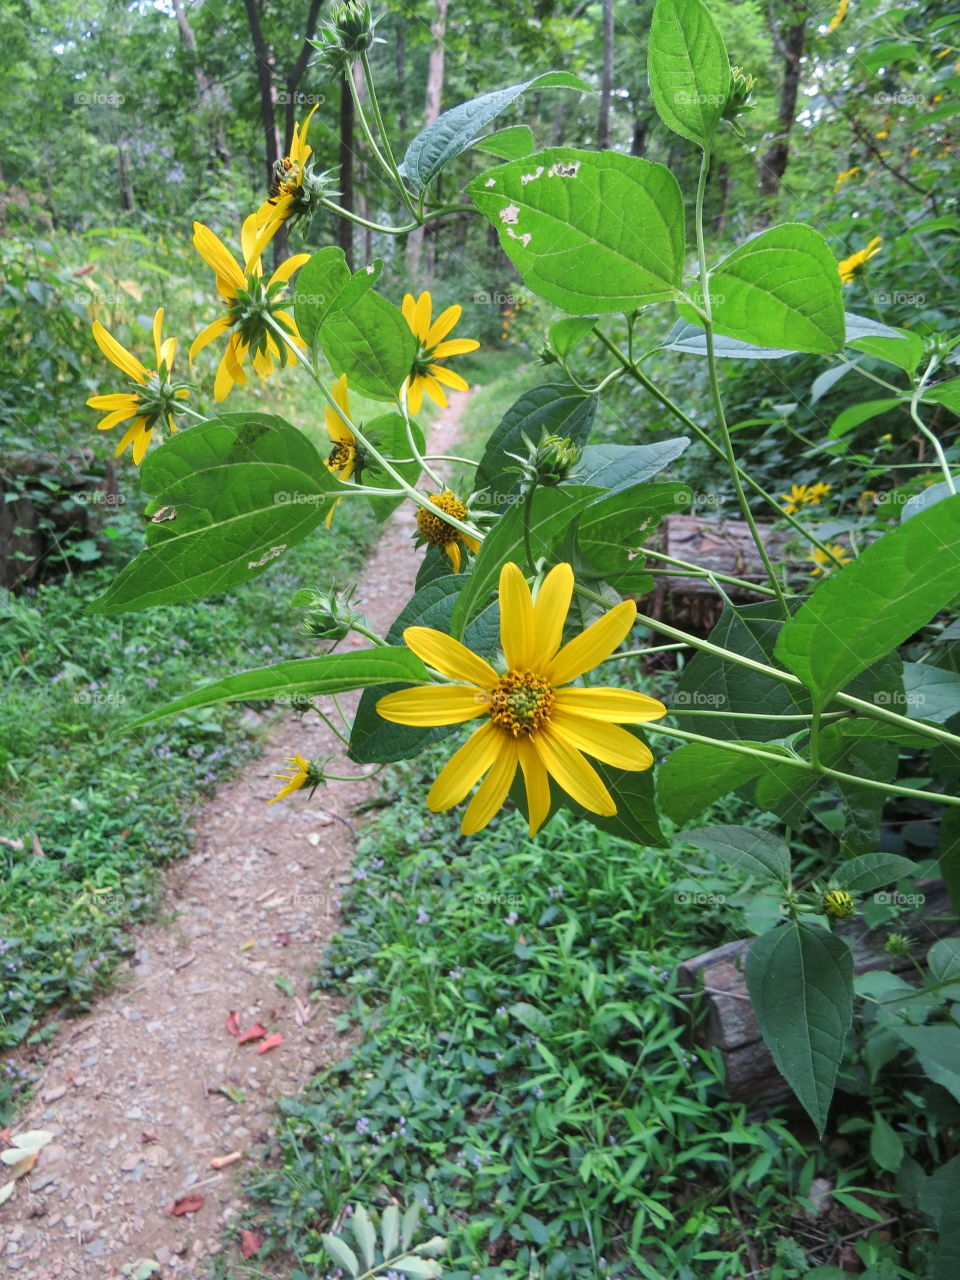 Flower along the Appalachian Trail in Virginia, Shenandoah National Park.